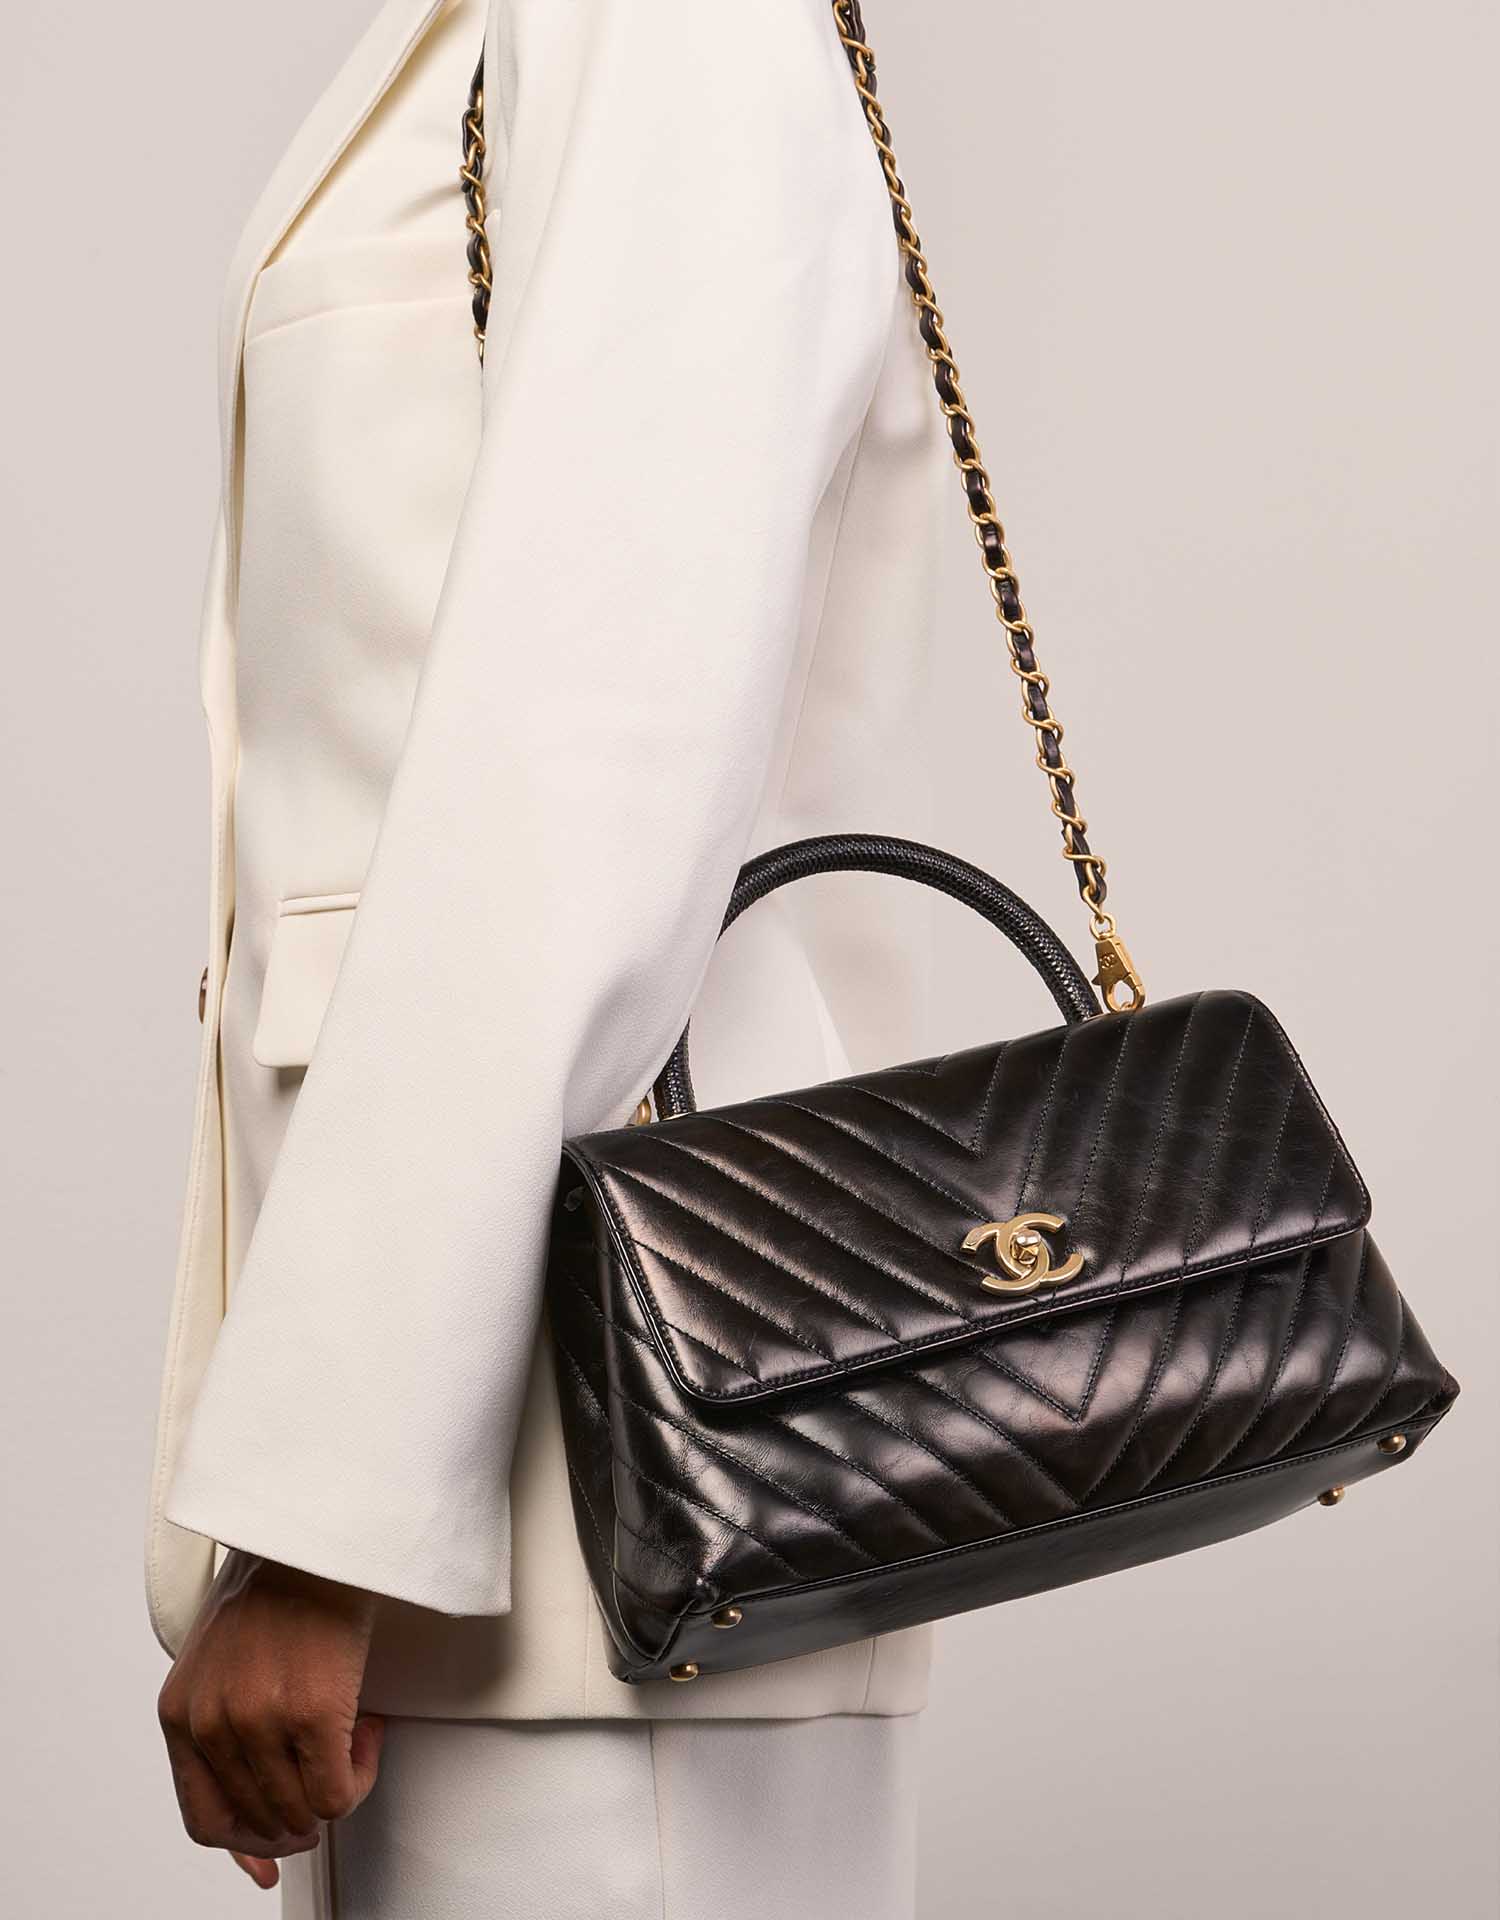 Chanel TimelessHandle Medium Black Sizes Worn | Sell your designer bag on Saclab.com